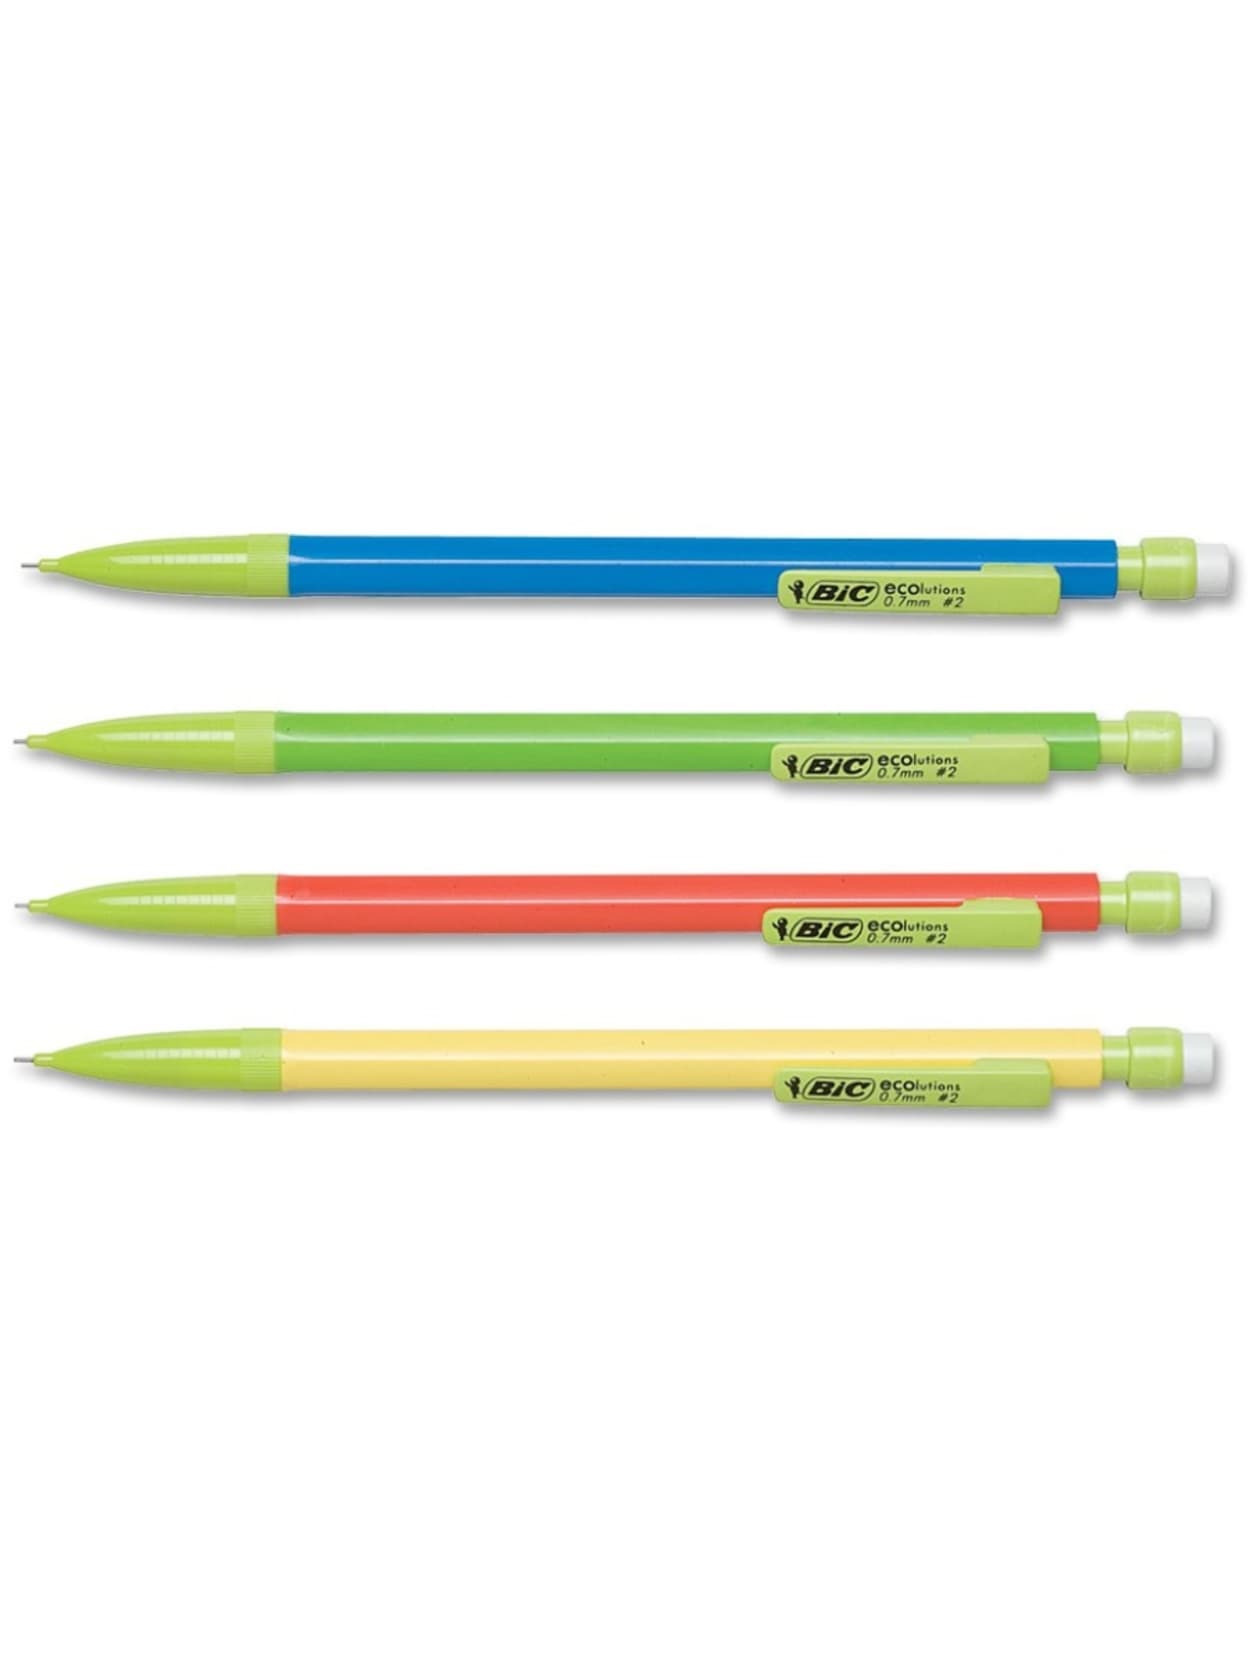 plastic lead pencils